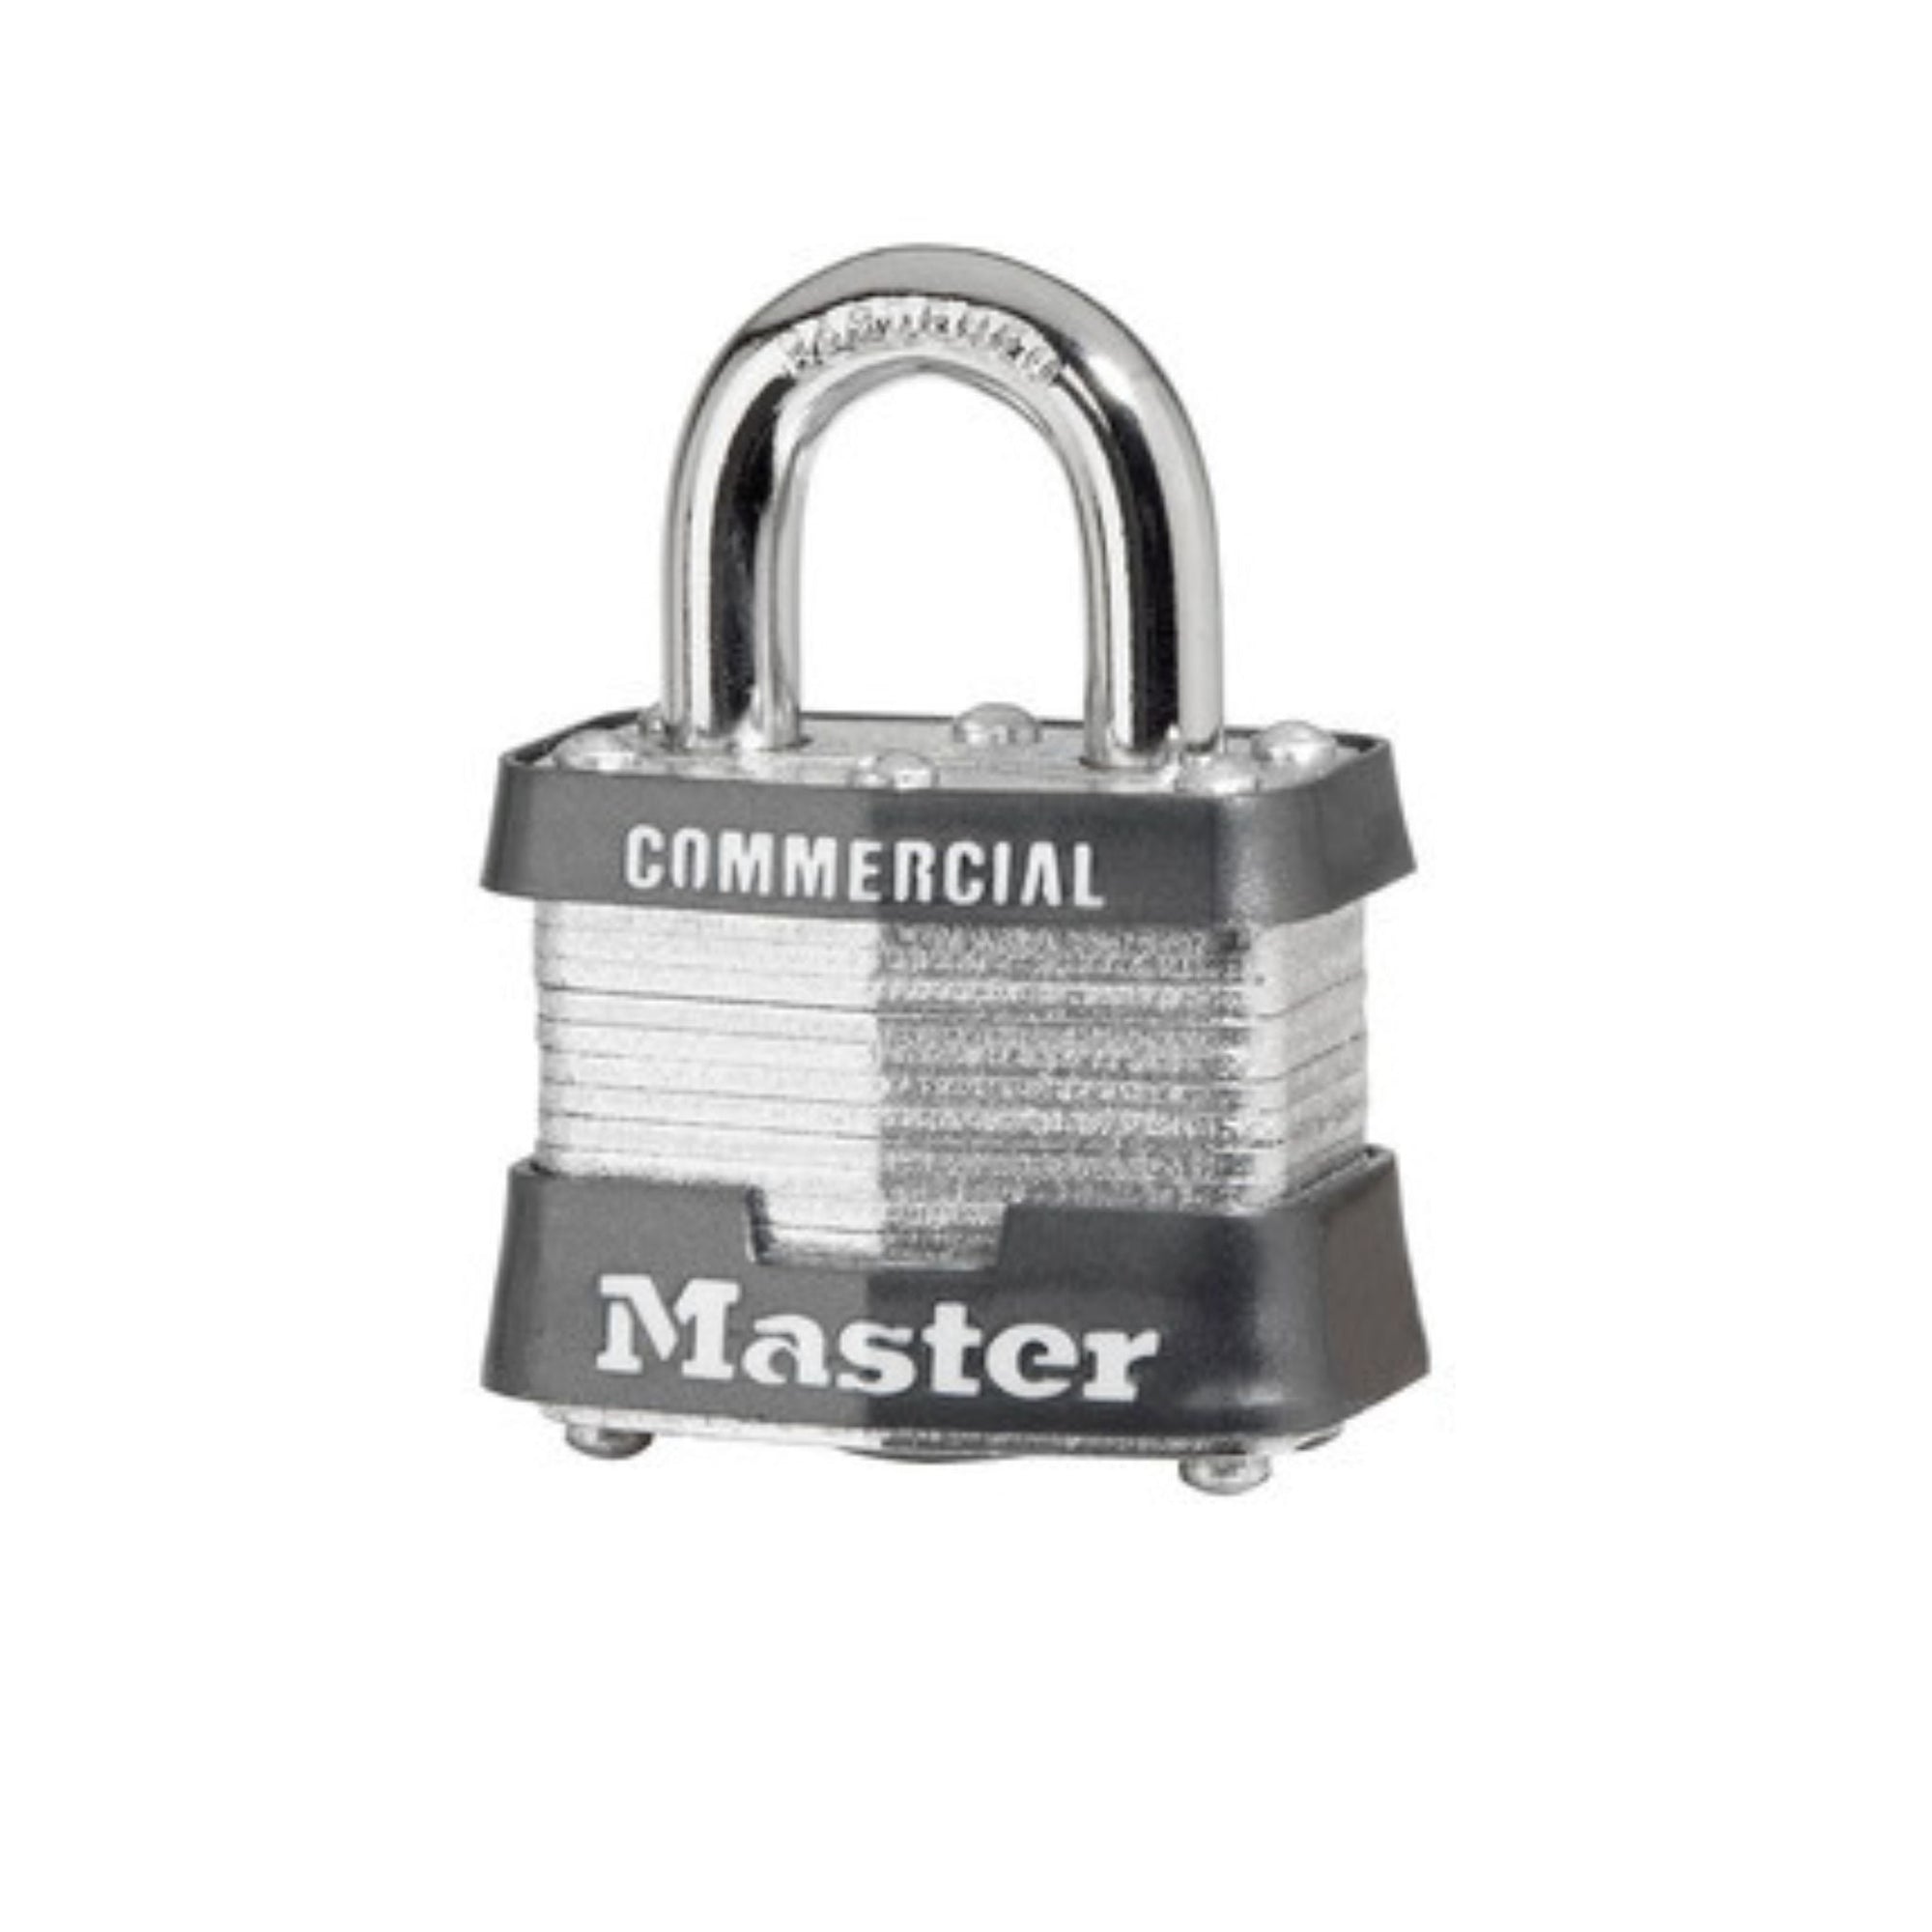 Master Lock 3KA 0312 Lock Laminated steel No. 3 Series Padlock Keyed to Match Existing Key Number KA0312 - The Lock Source